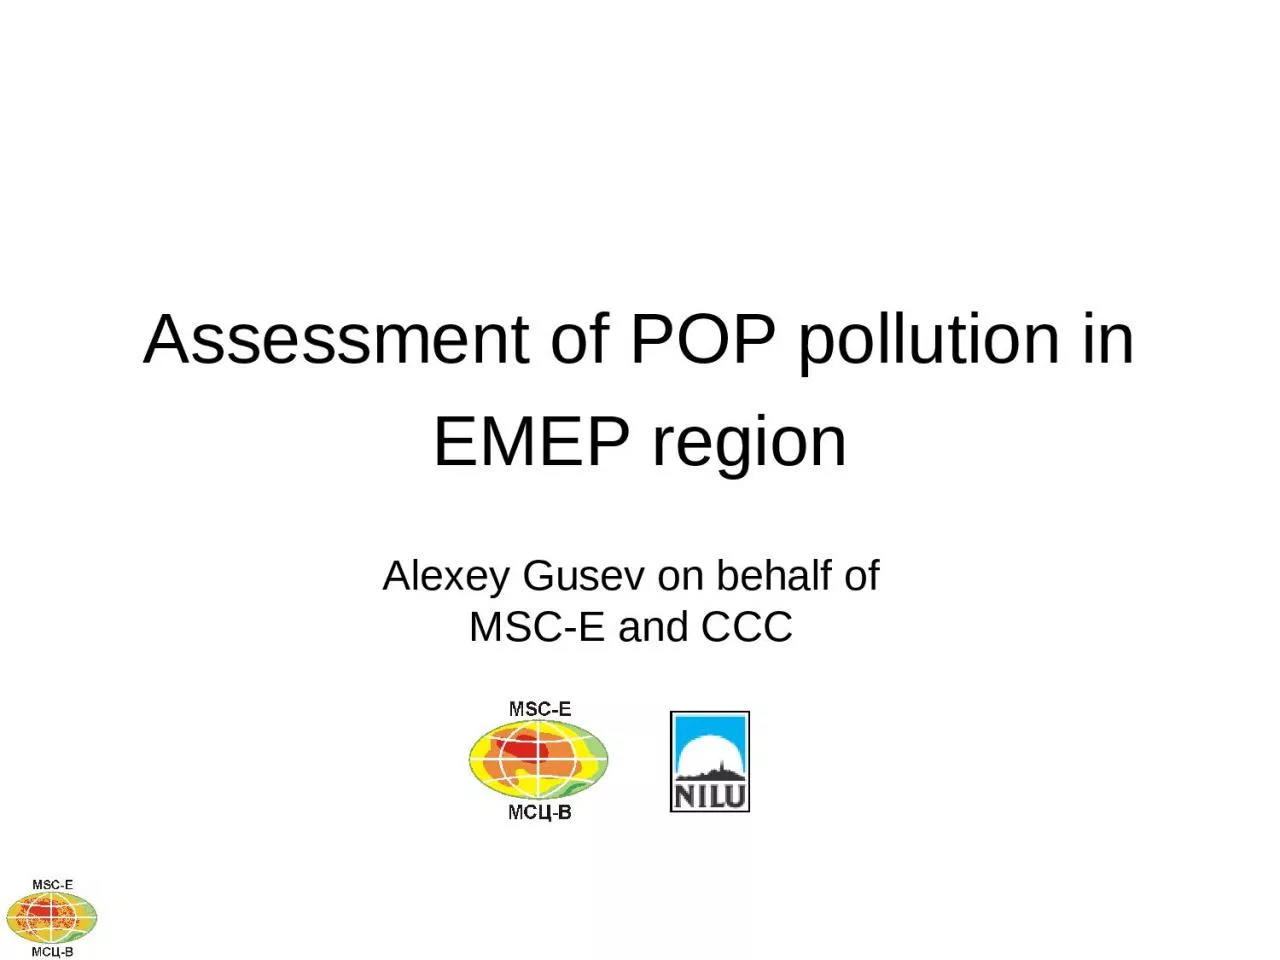 Assessment of POP pollution in EMEP region